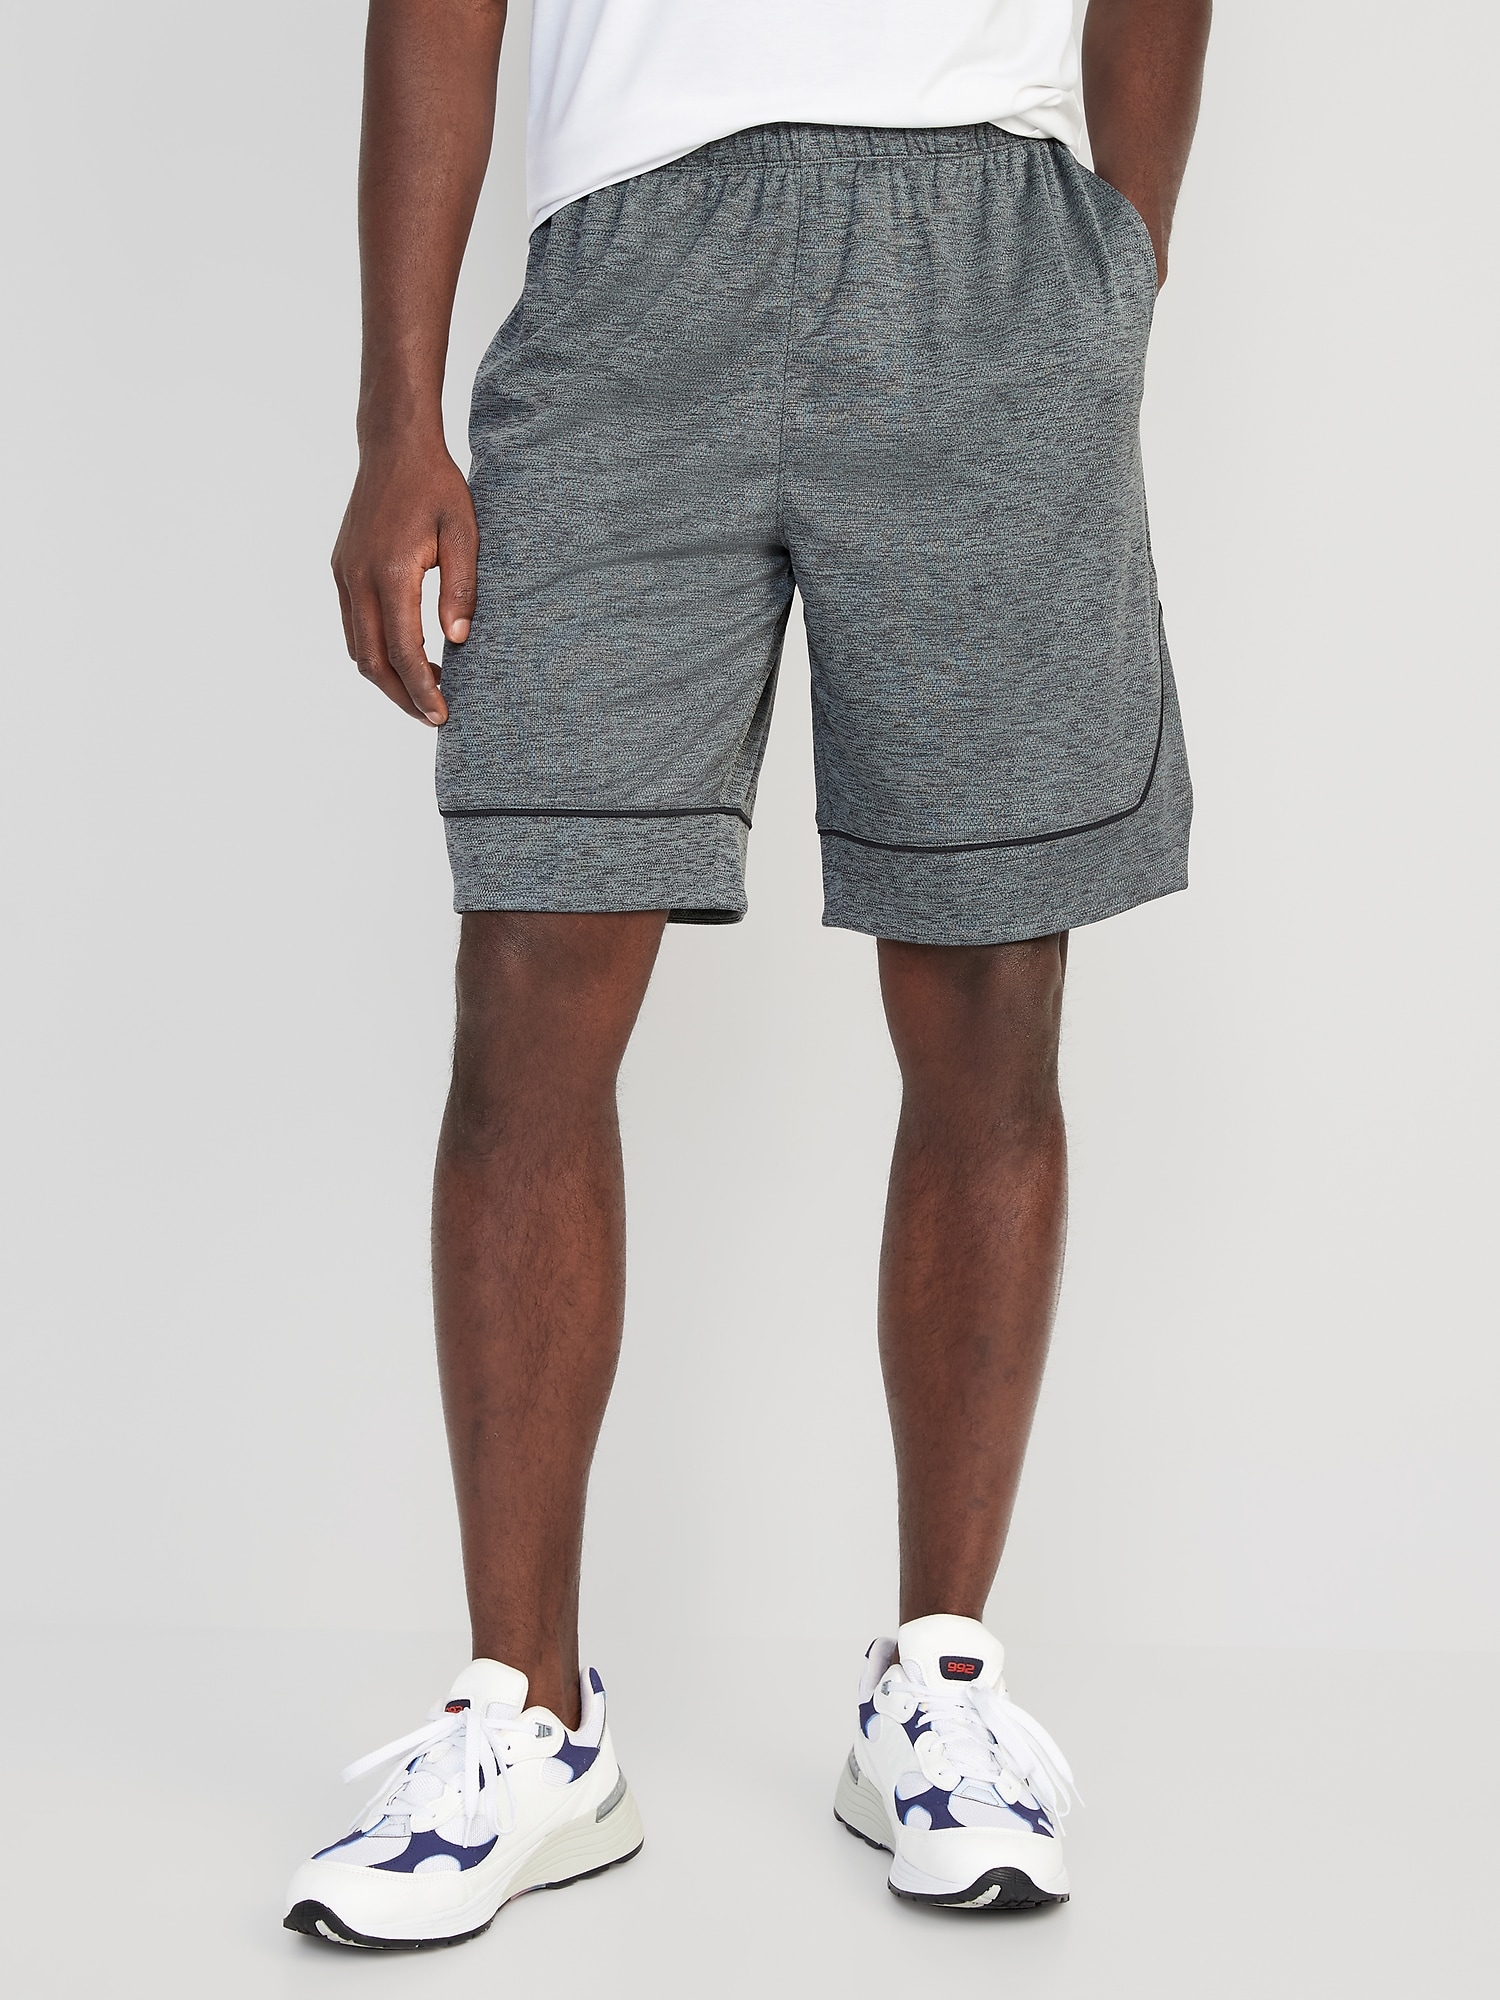 Old Navy Go-Dry Mesh Basketball Shorts for Men -- 10-inch inseam gray. 1